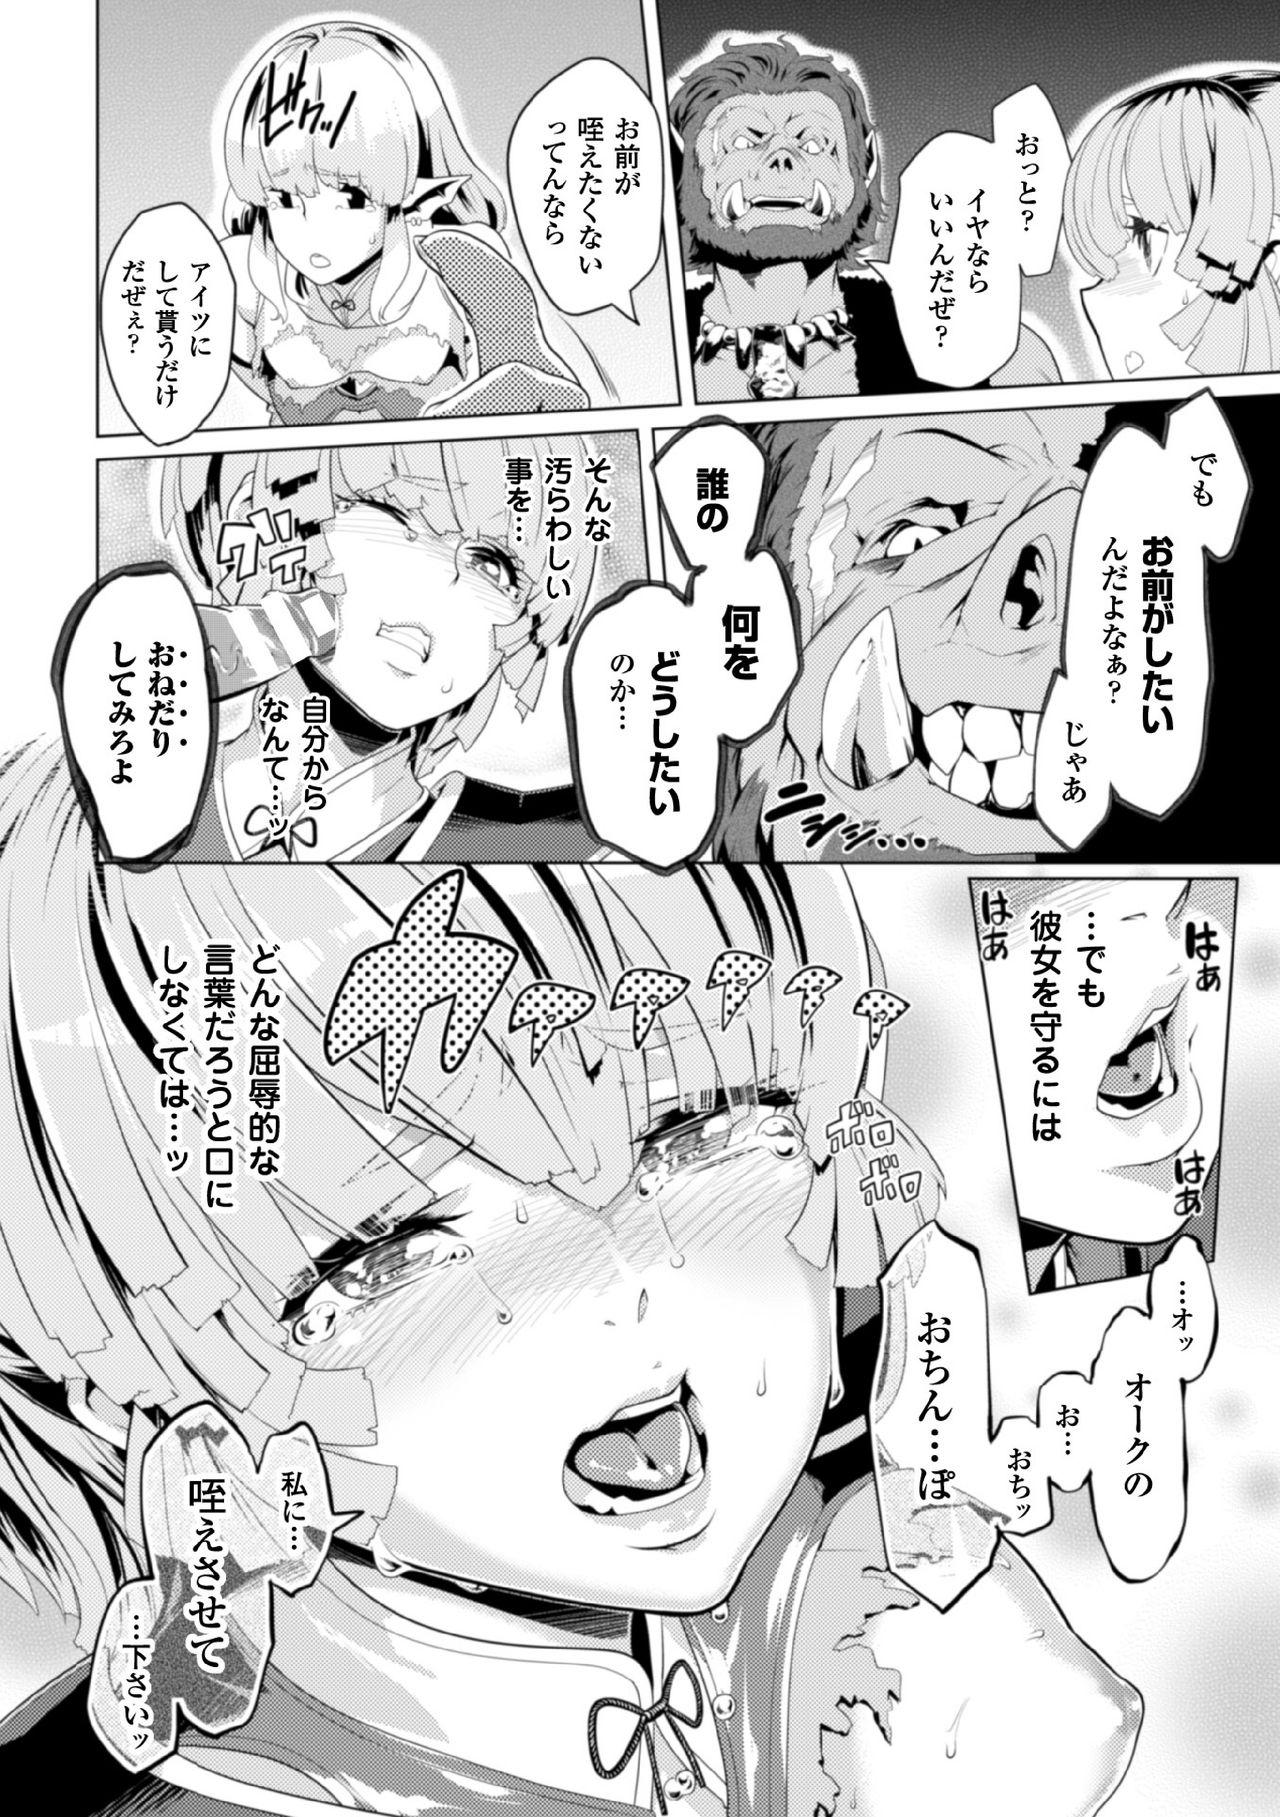 2D Comic Magazine Kedakai Onna mo Dogeza Shite Sex Onedari! Vol. 1 34